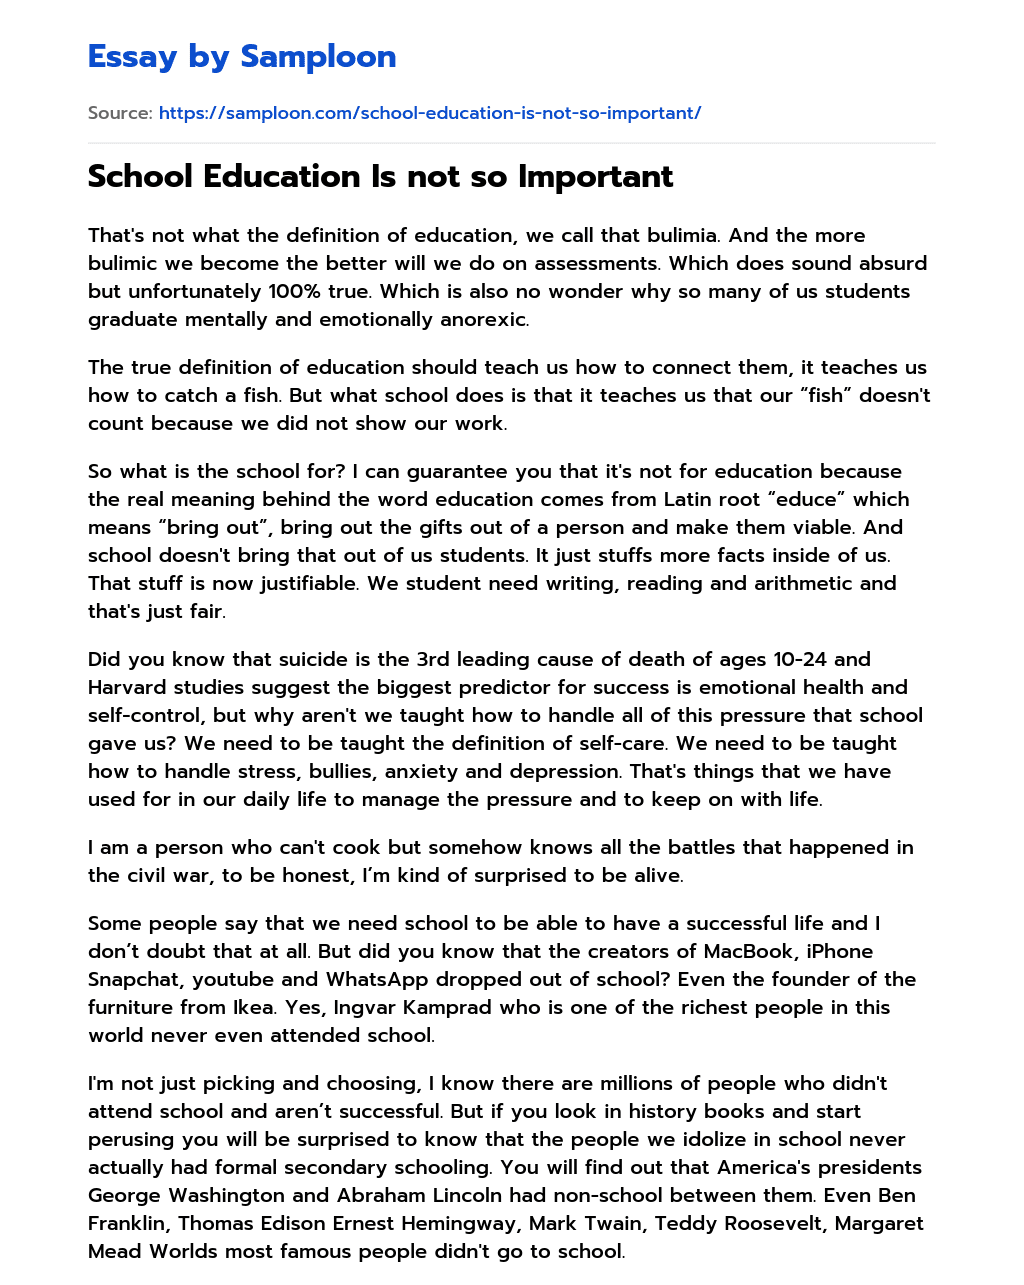 School Education Is not so Important essay